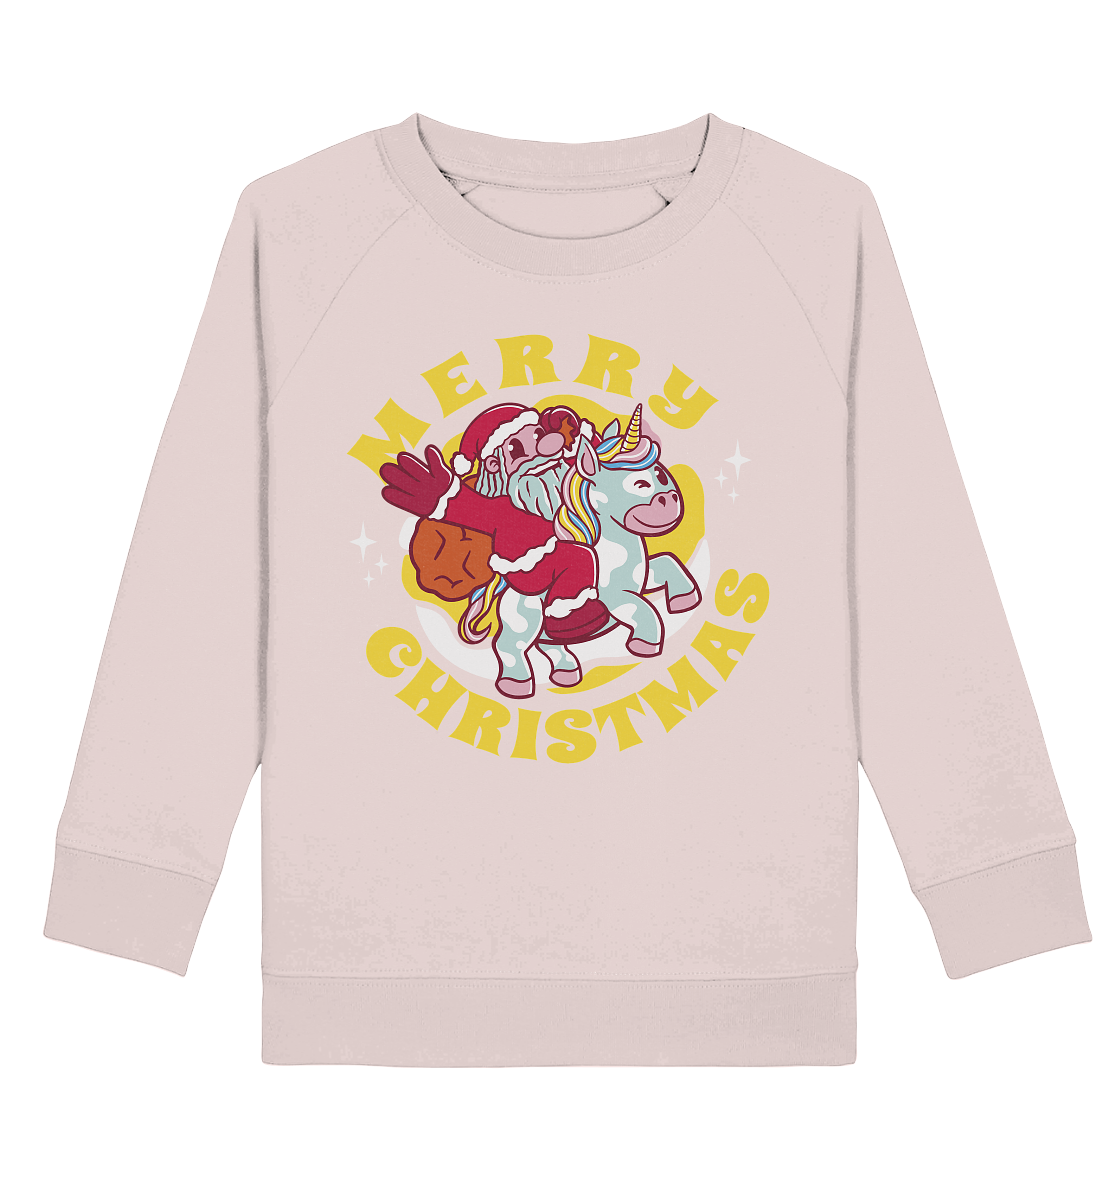 Riding Santa Claus, Merry Christmas, Merry Christmas - Kids Organic Sweatshirt